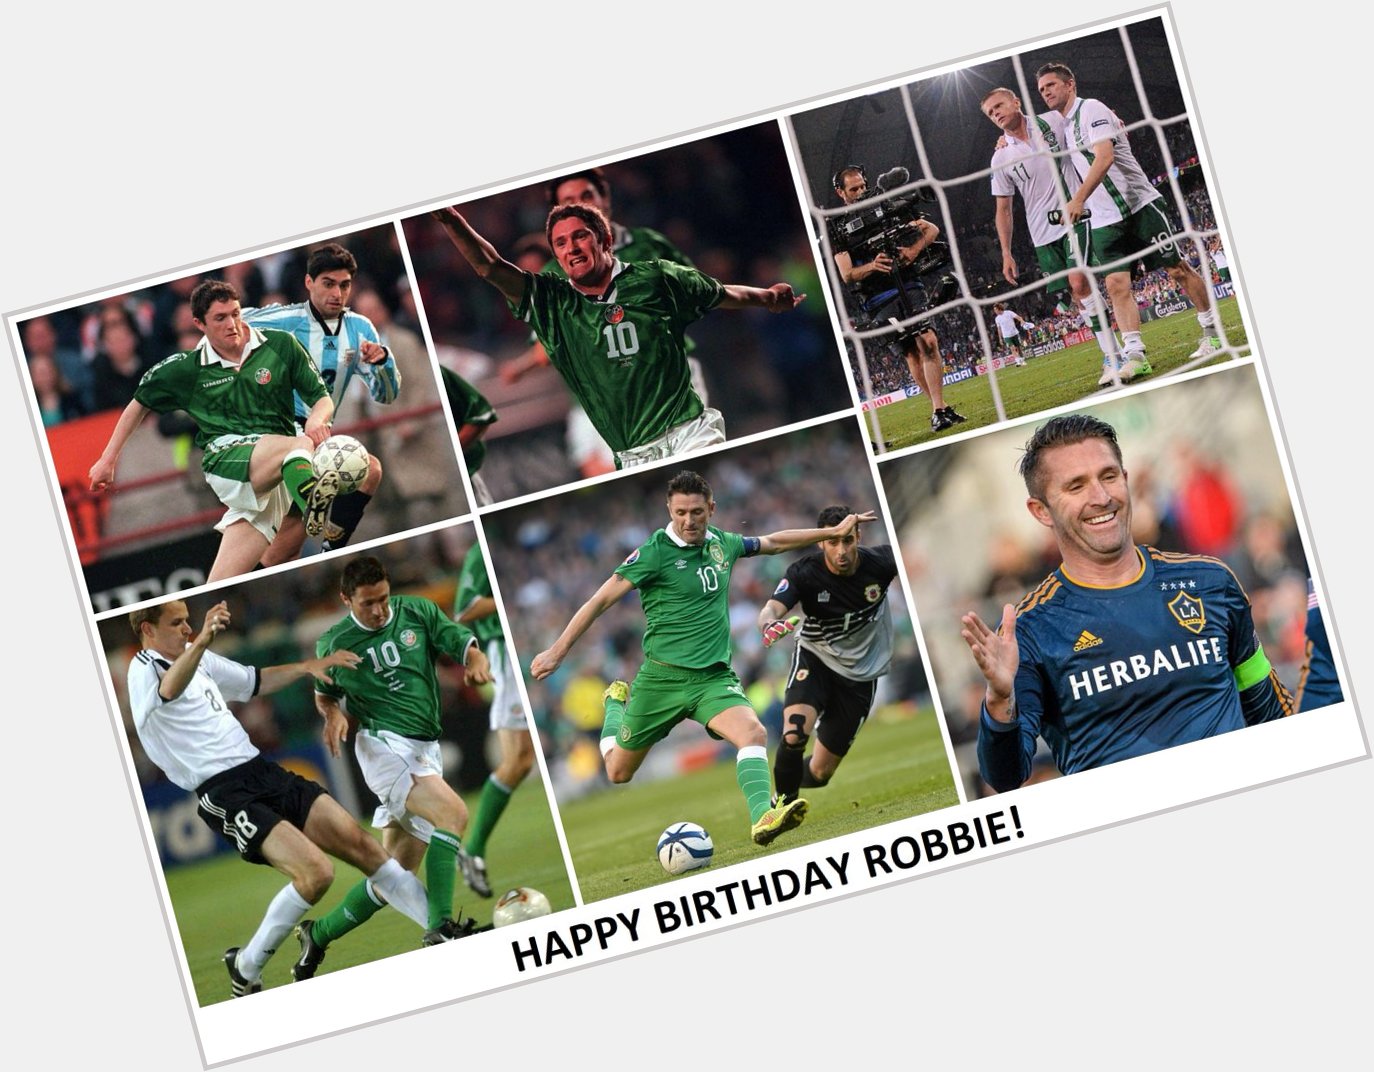 Happy birthday to Ireland captain & star Robbie Keane! 